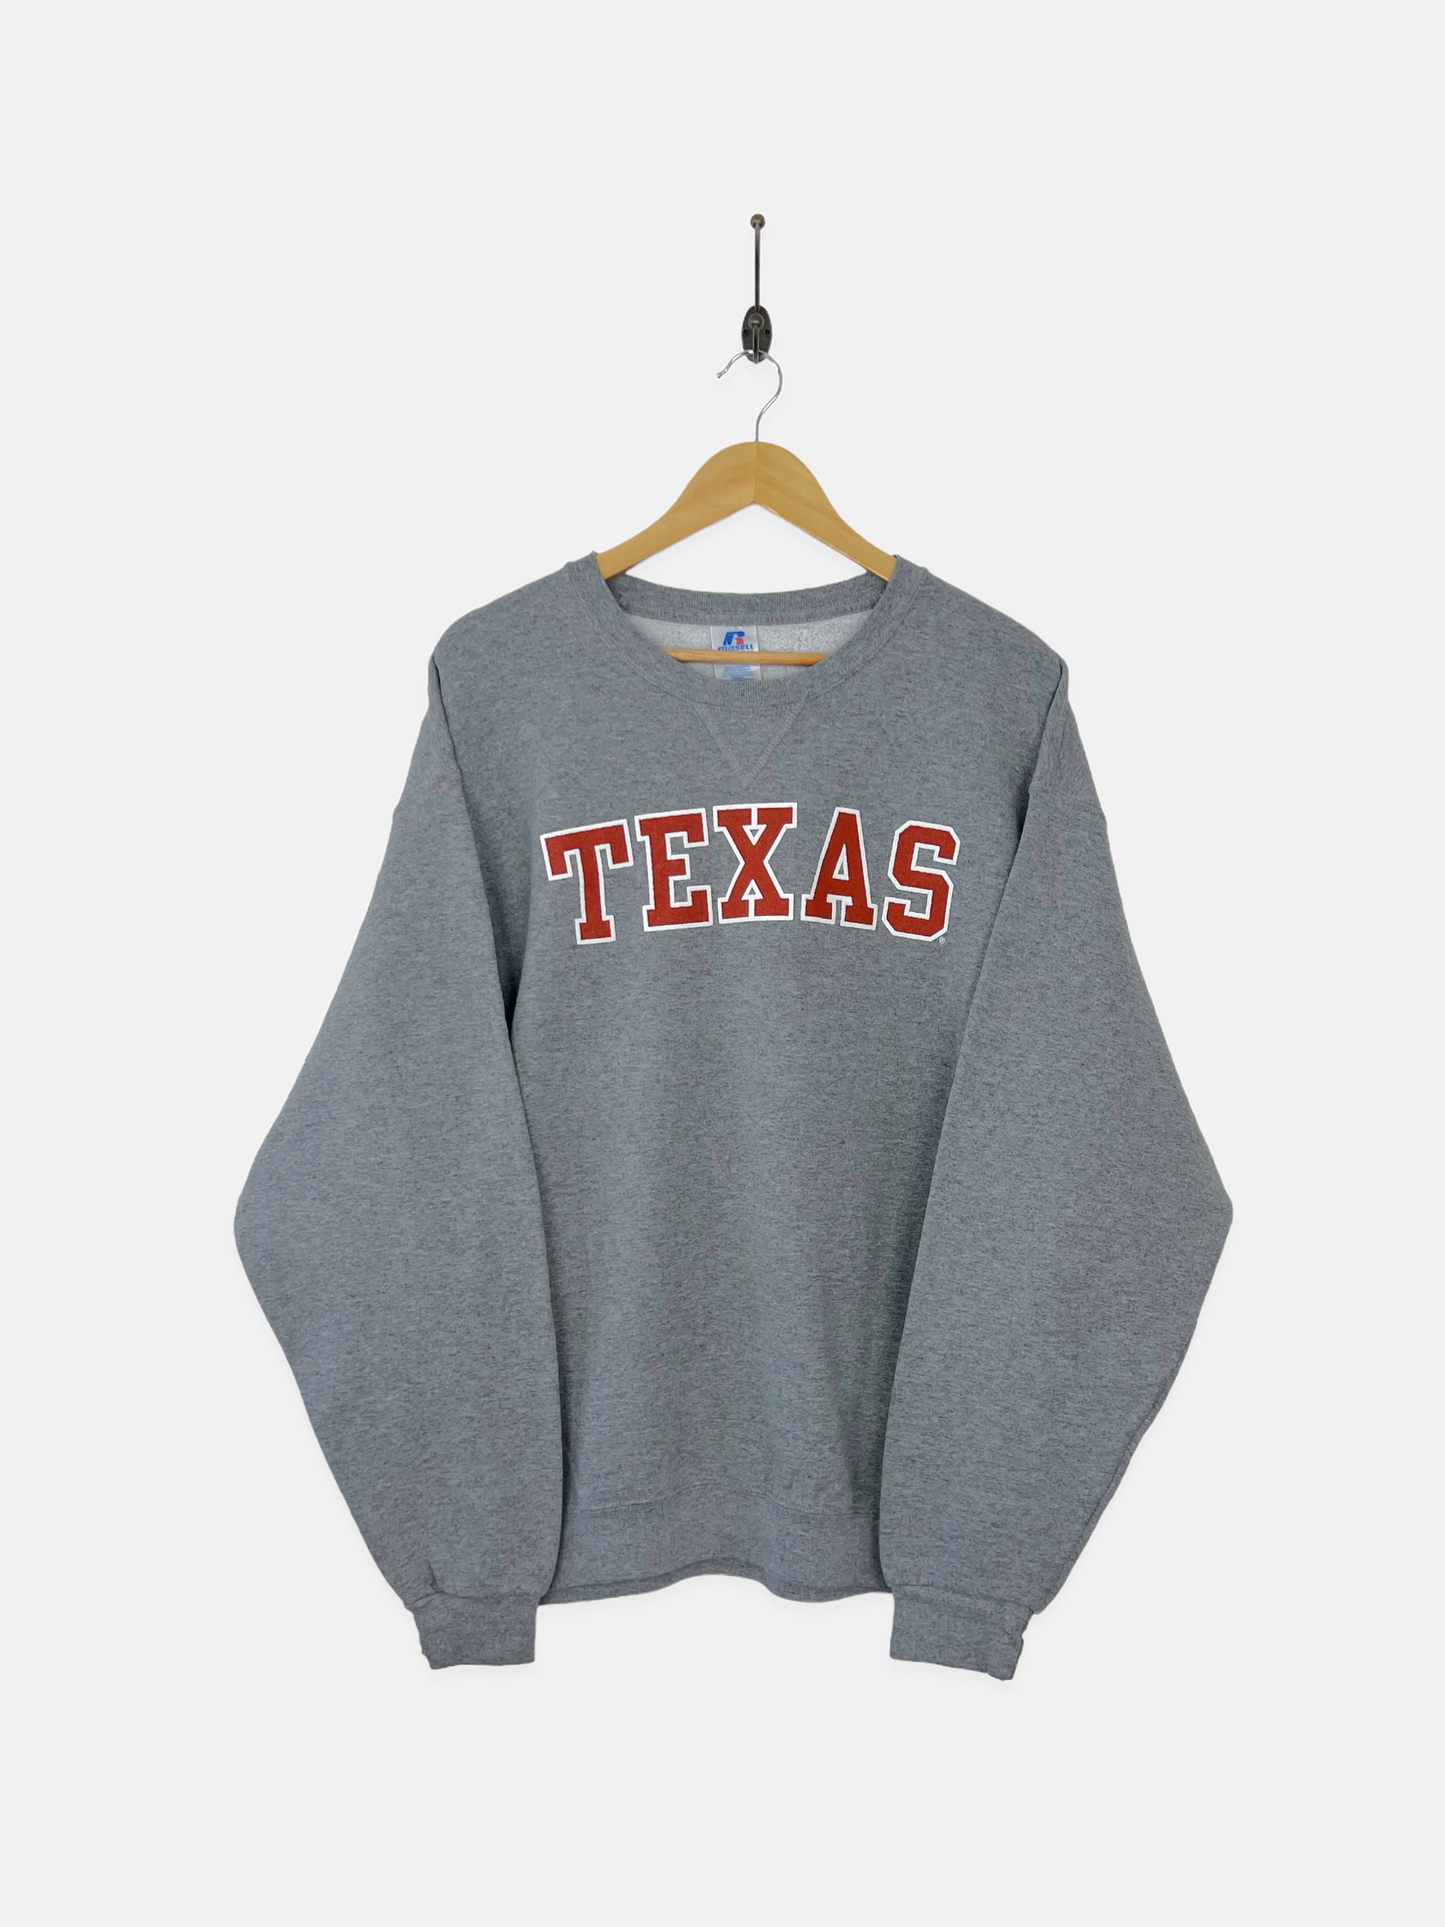 90's Texas Vintage Sweatshirt Size L-XL